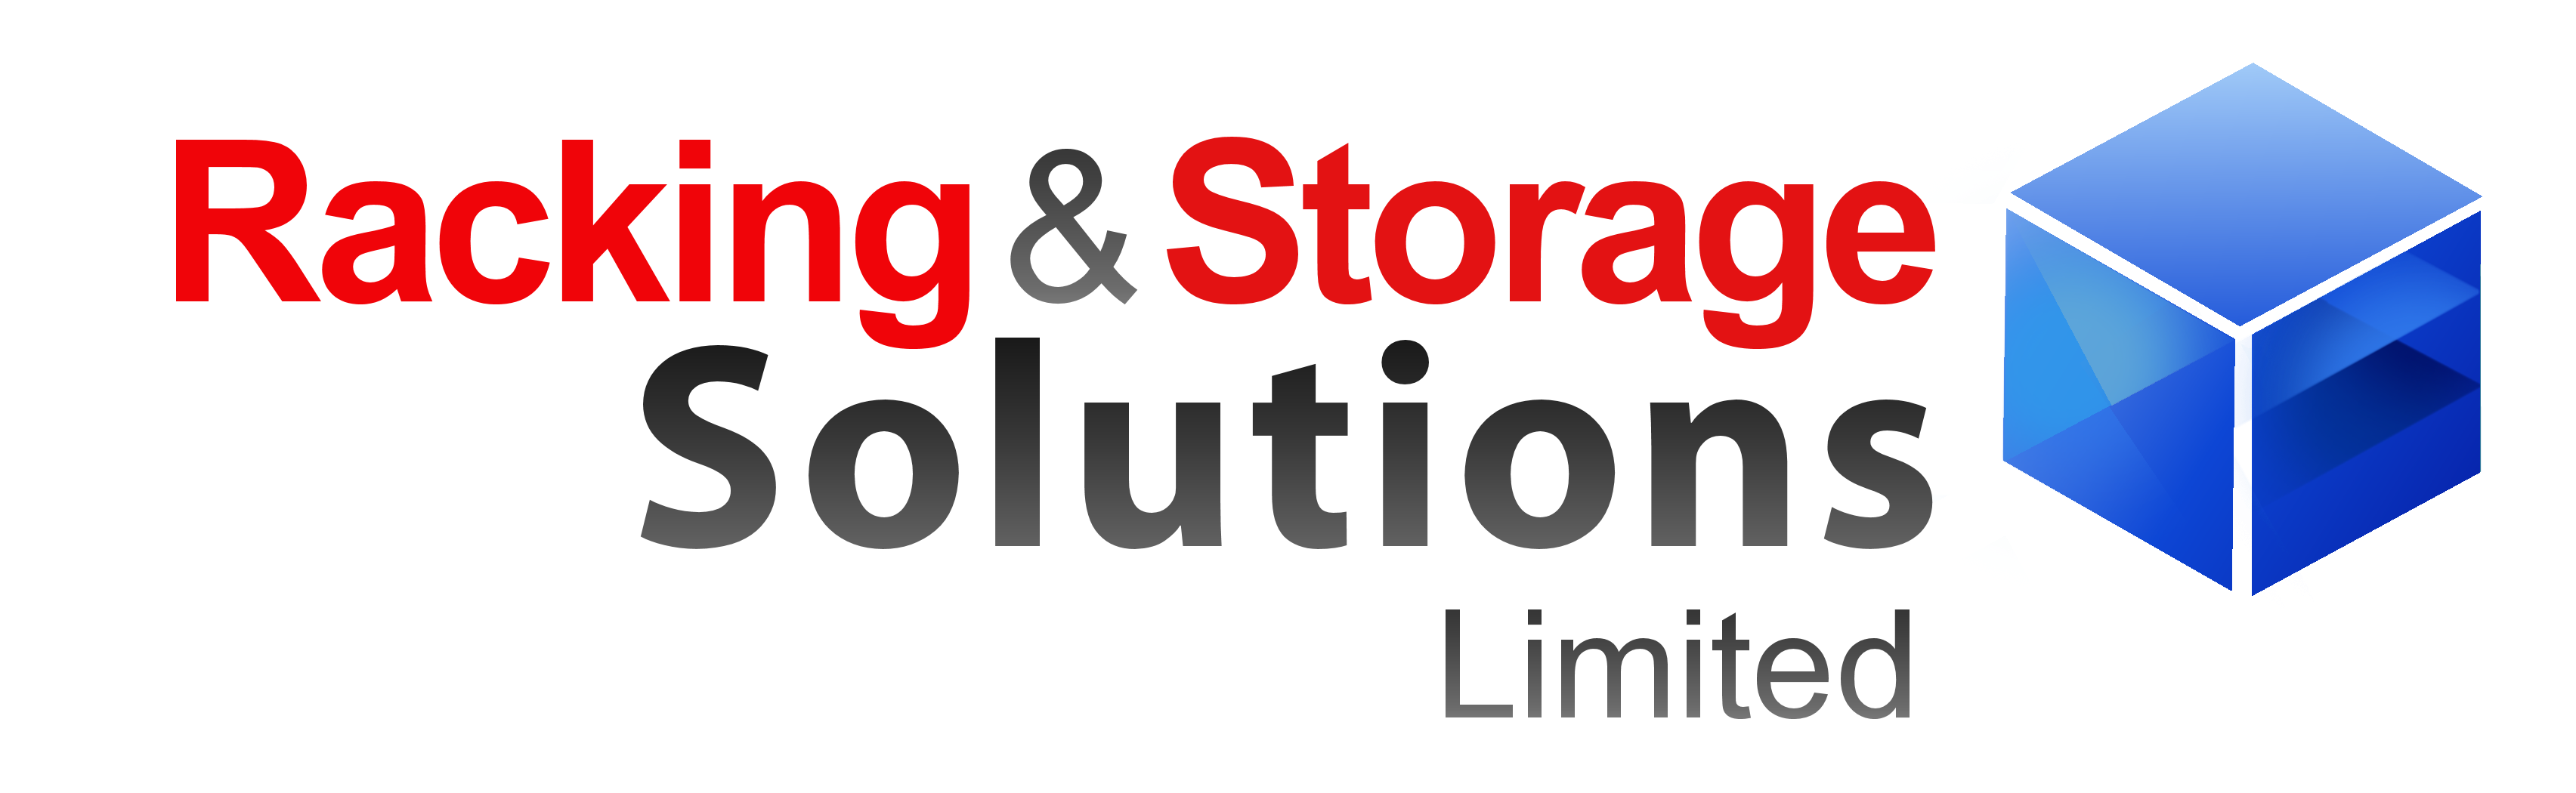 Racking & Storage Solutions Ltd